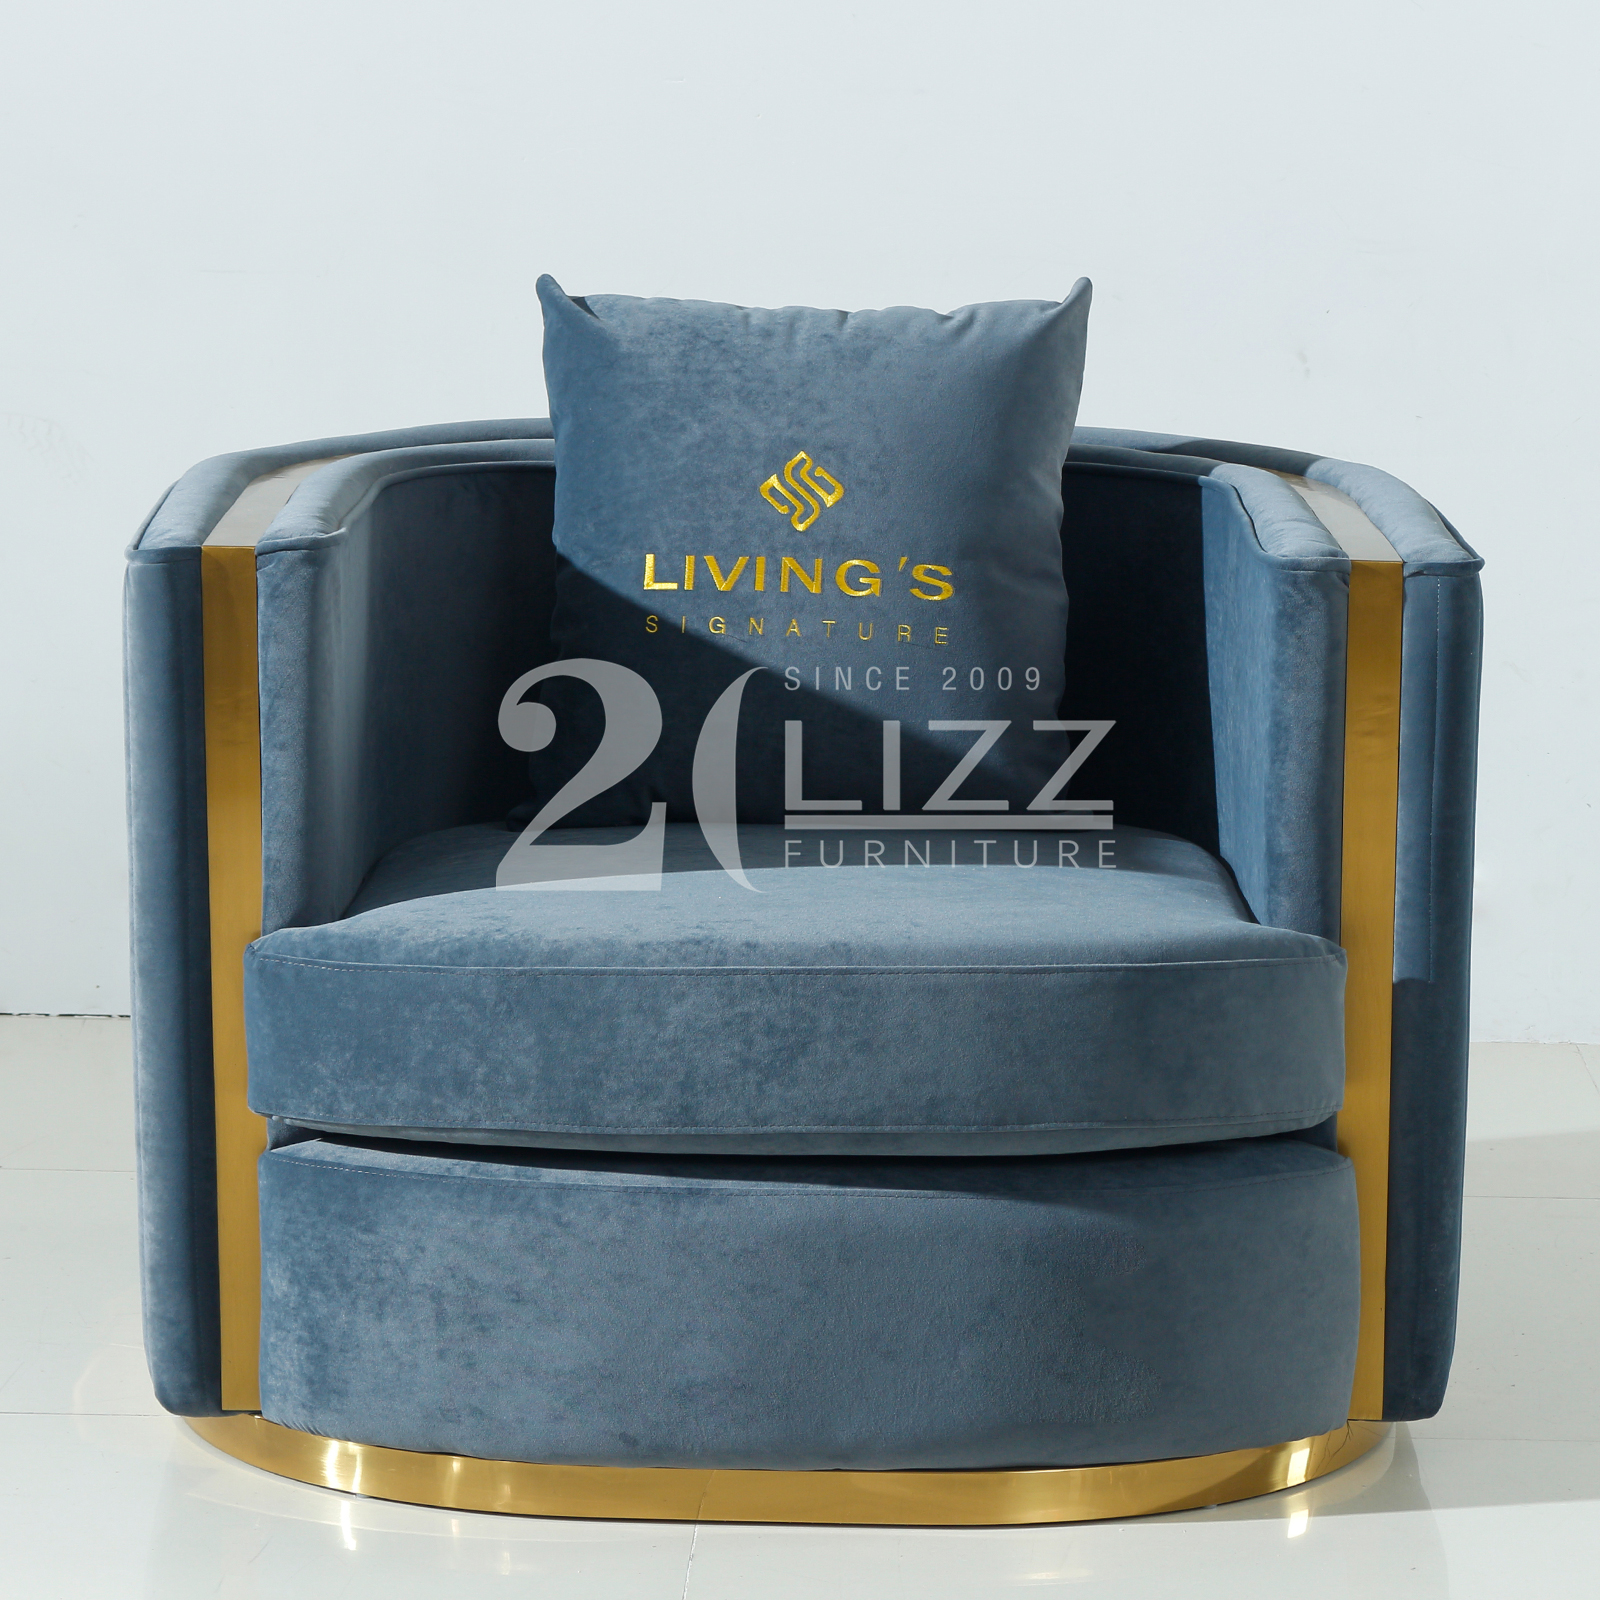 Dubai Luxury Floor Furniture Curved Fabric Sofa Chair 